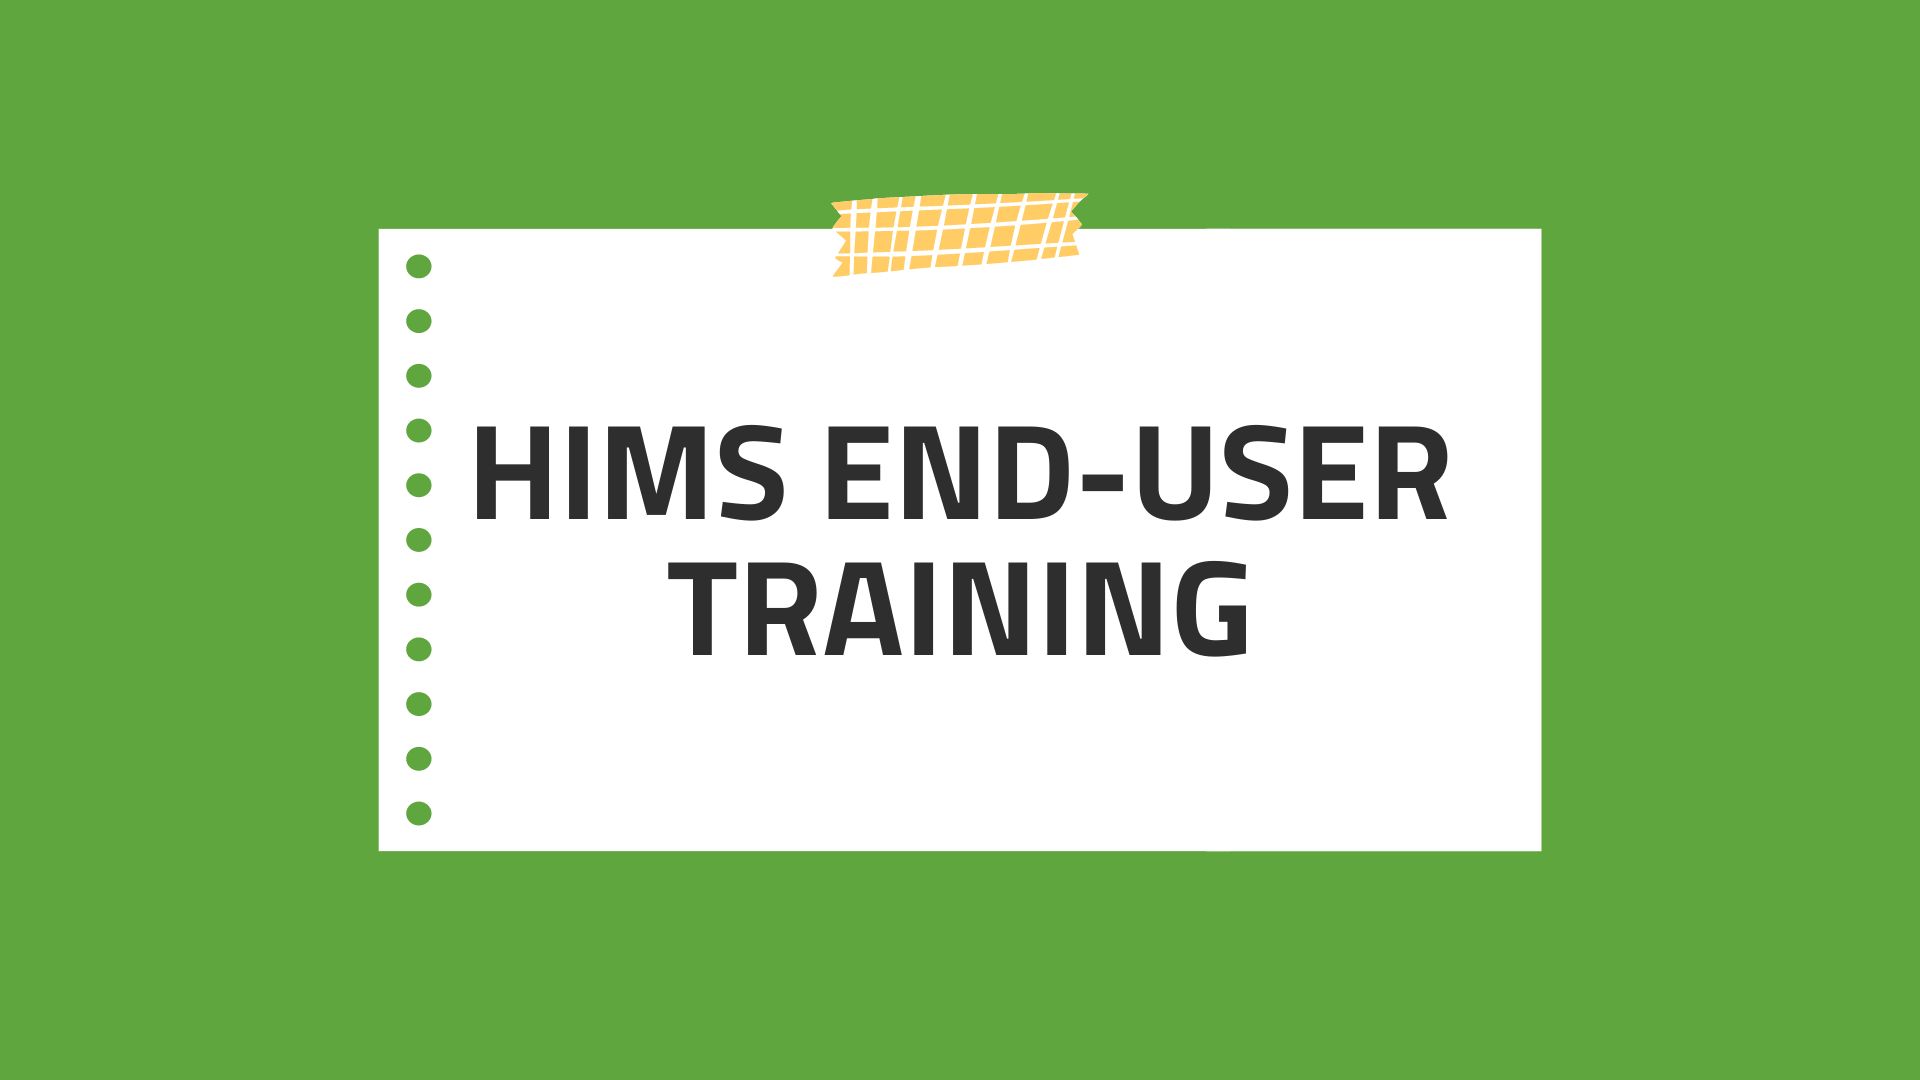 HIMS End-User Training